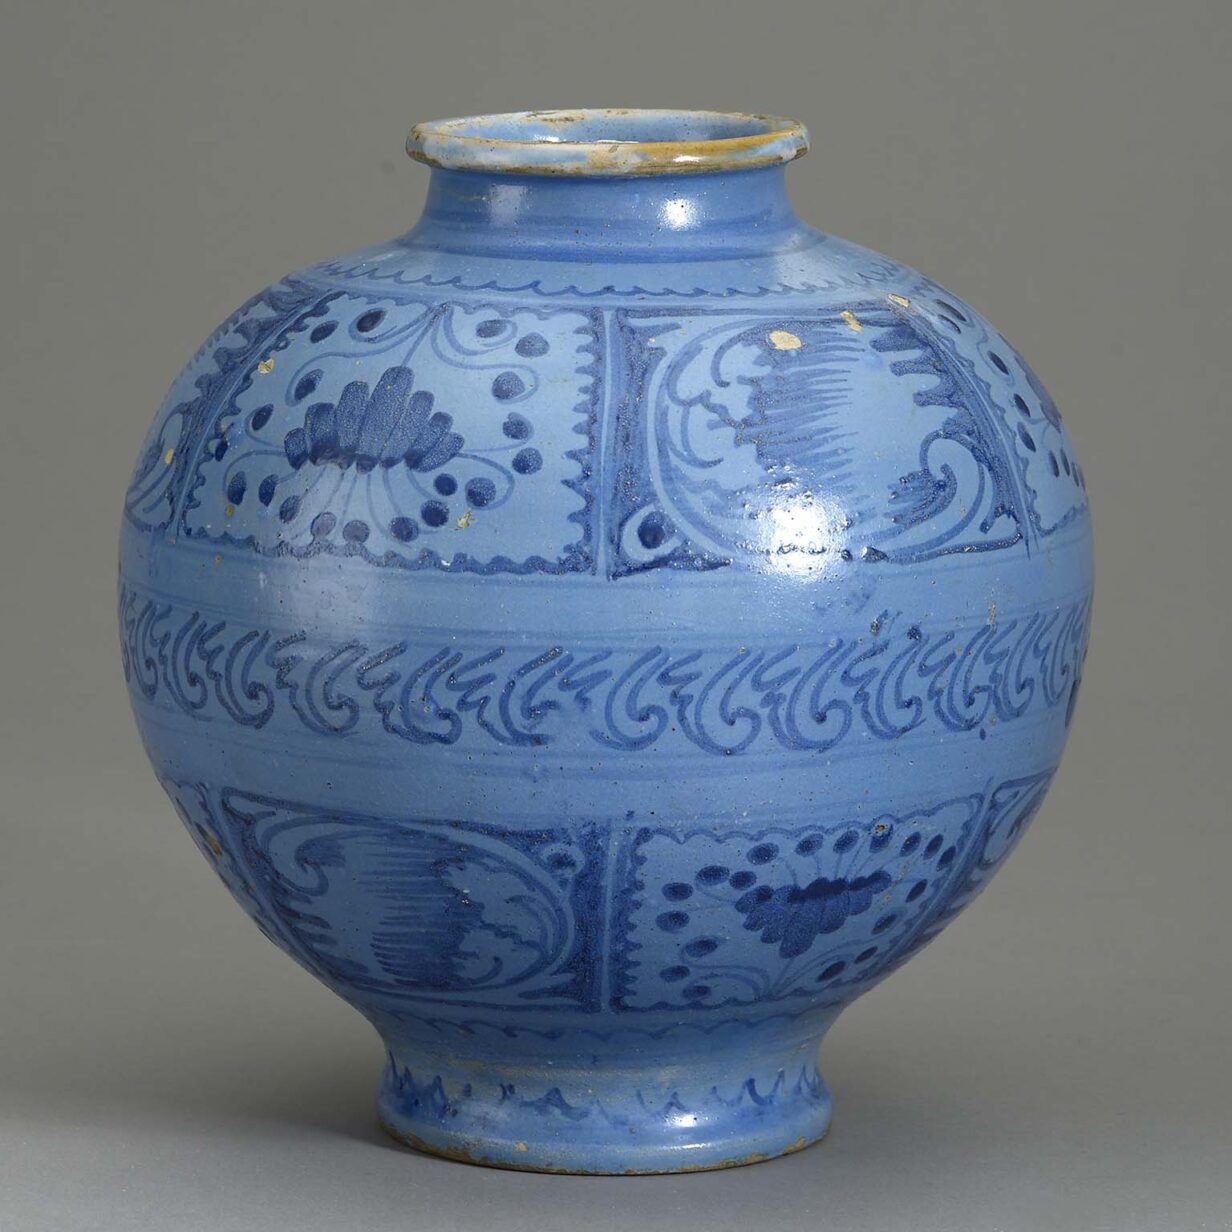 16th century blue gazed majolica "boccia" apothecary jar